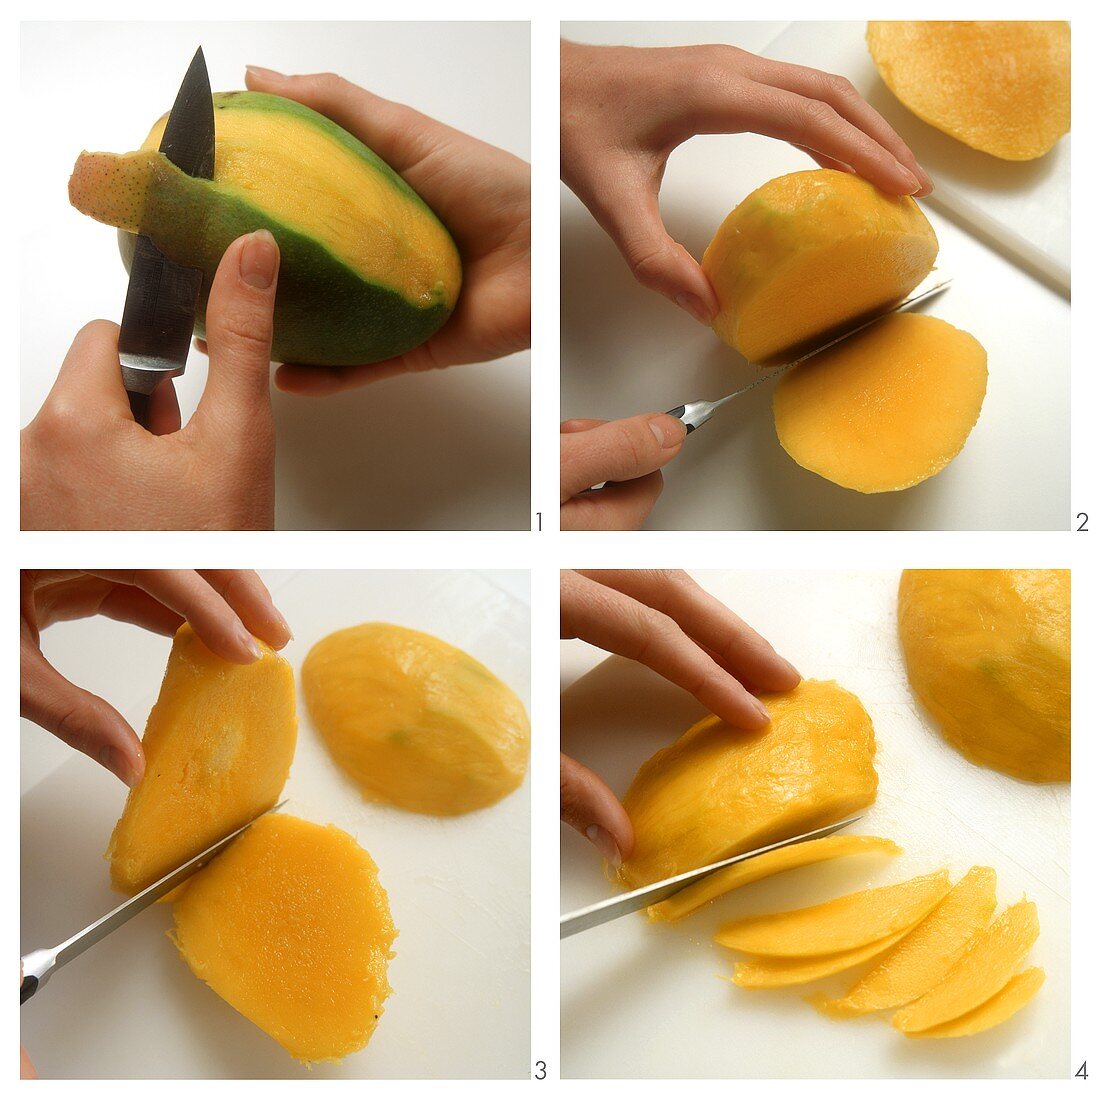 Peeling and slicing mango